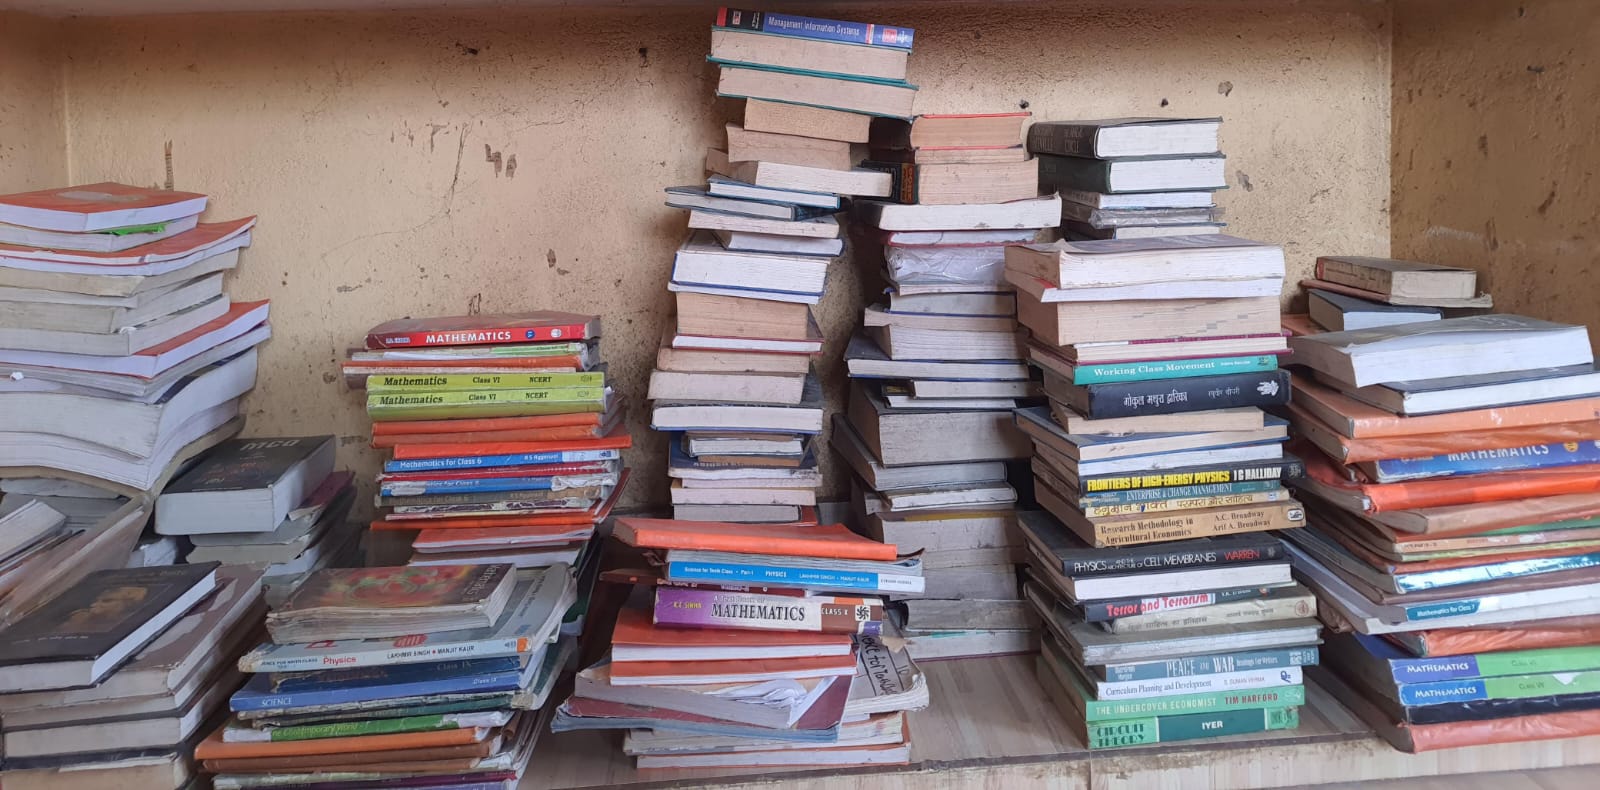 Kitabwalah.com sells second-hand textbooks, fiction and non-fiction books